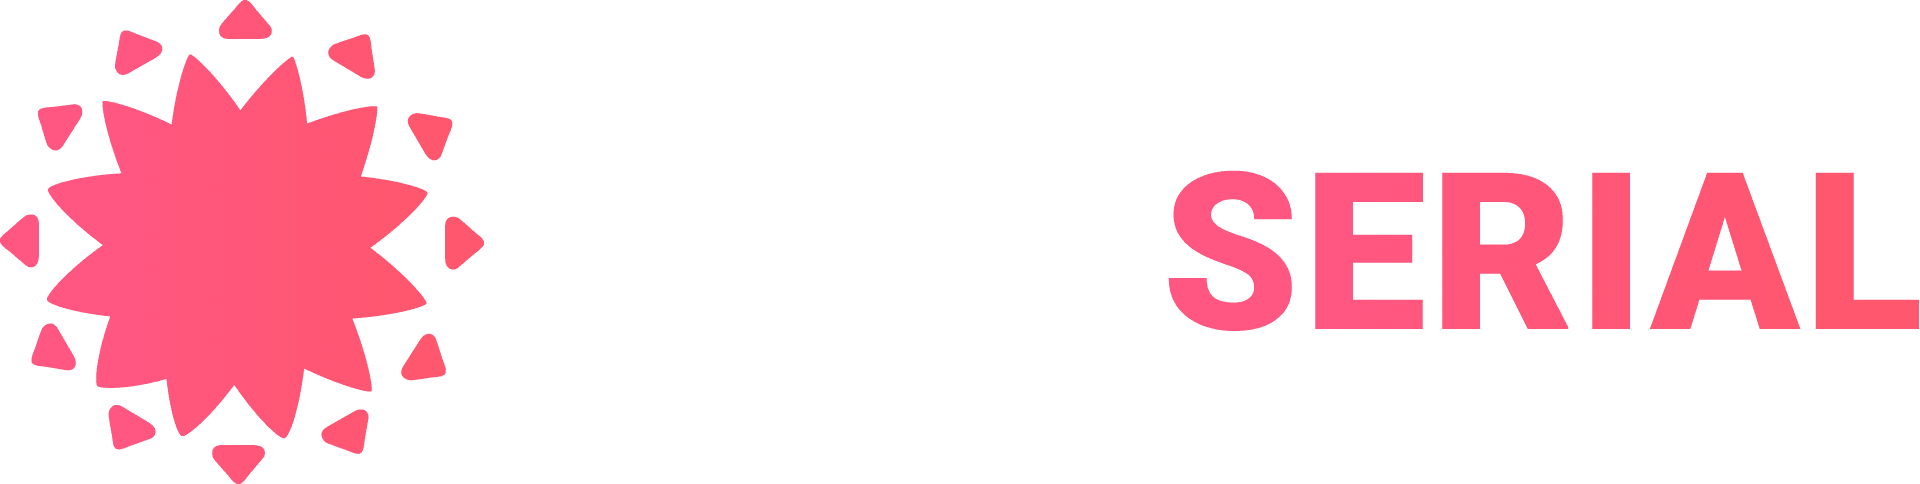 Turkserial biz. Turkish Serials логотип.